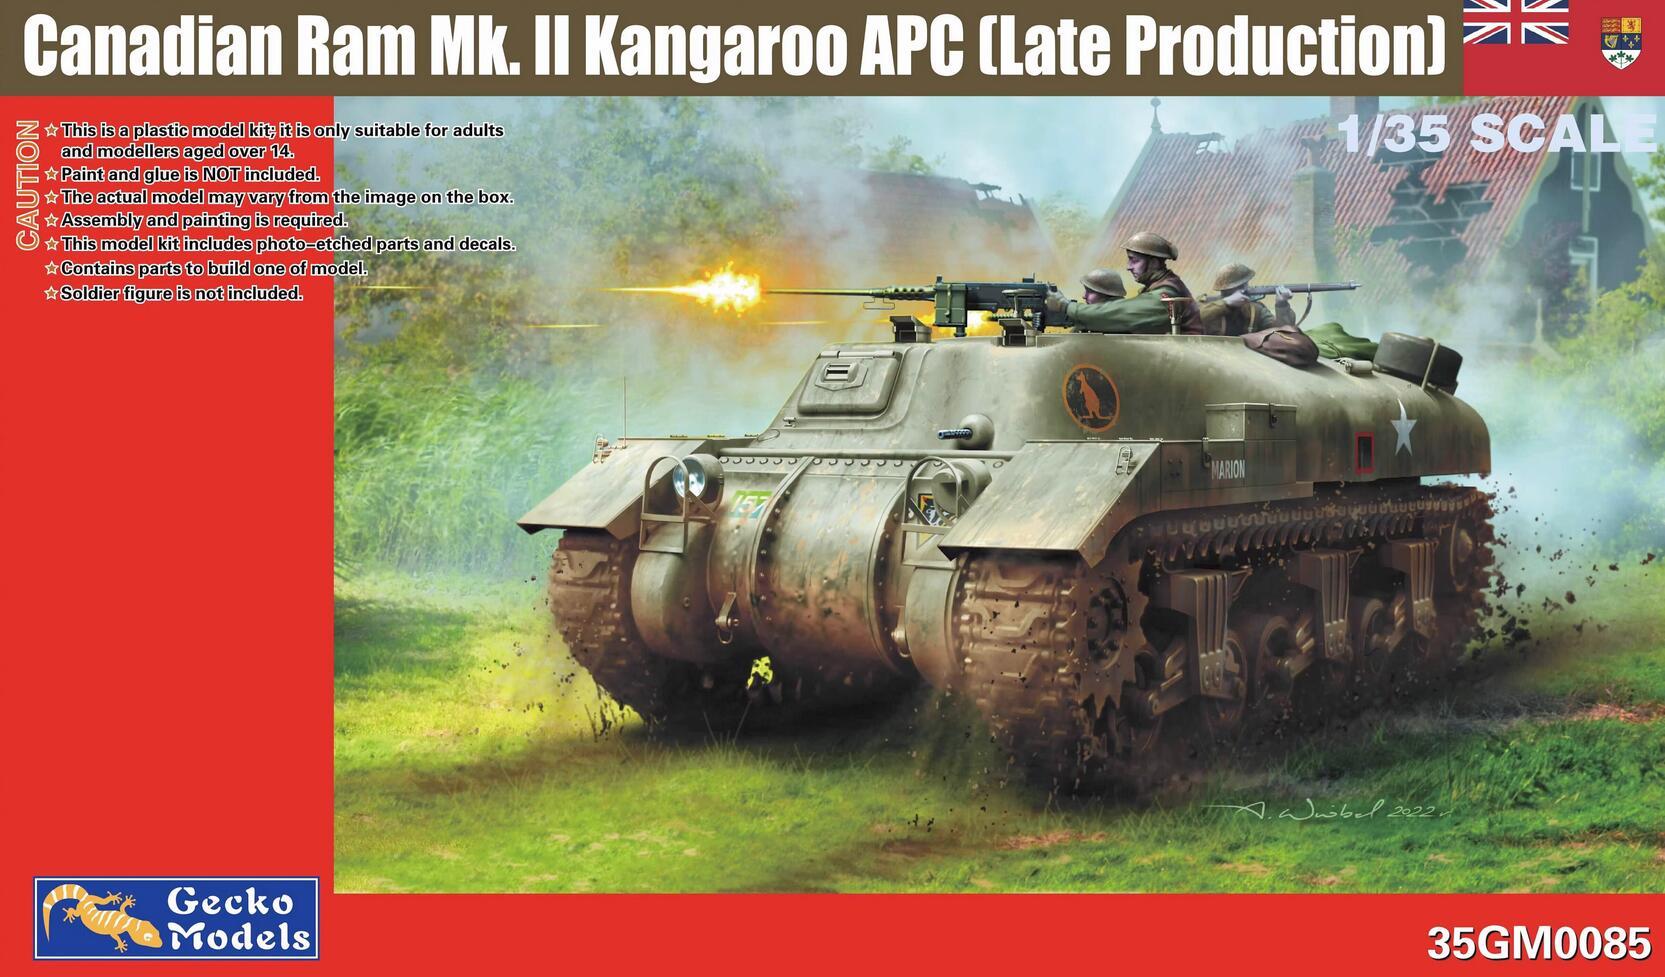 35GM0085  техника и вооружение  Canadian Ram Mk II Kangaroo APC (Late Production)  (1:35)